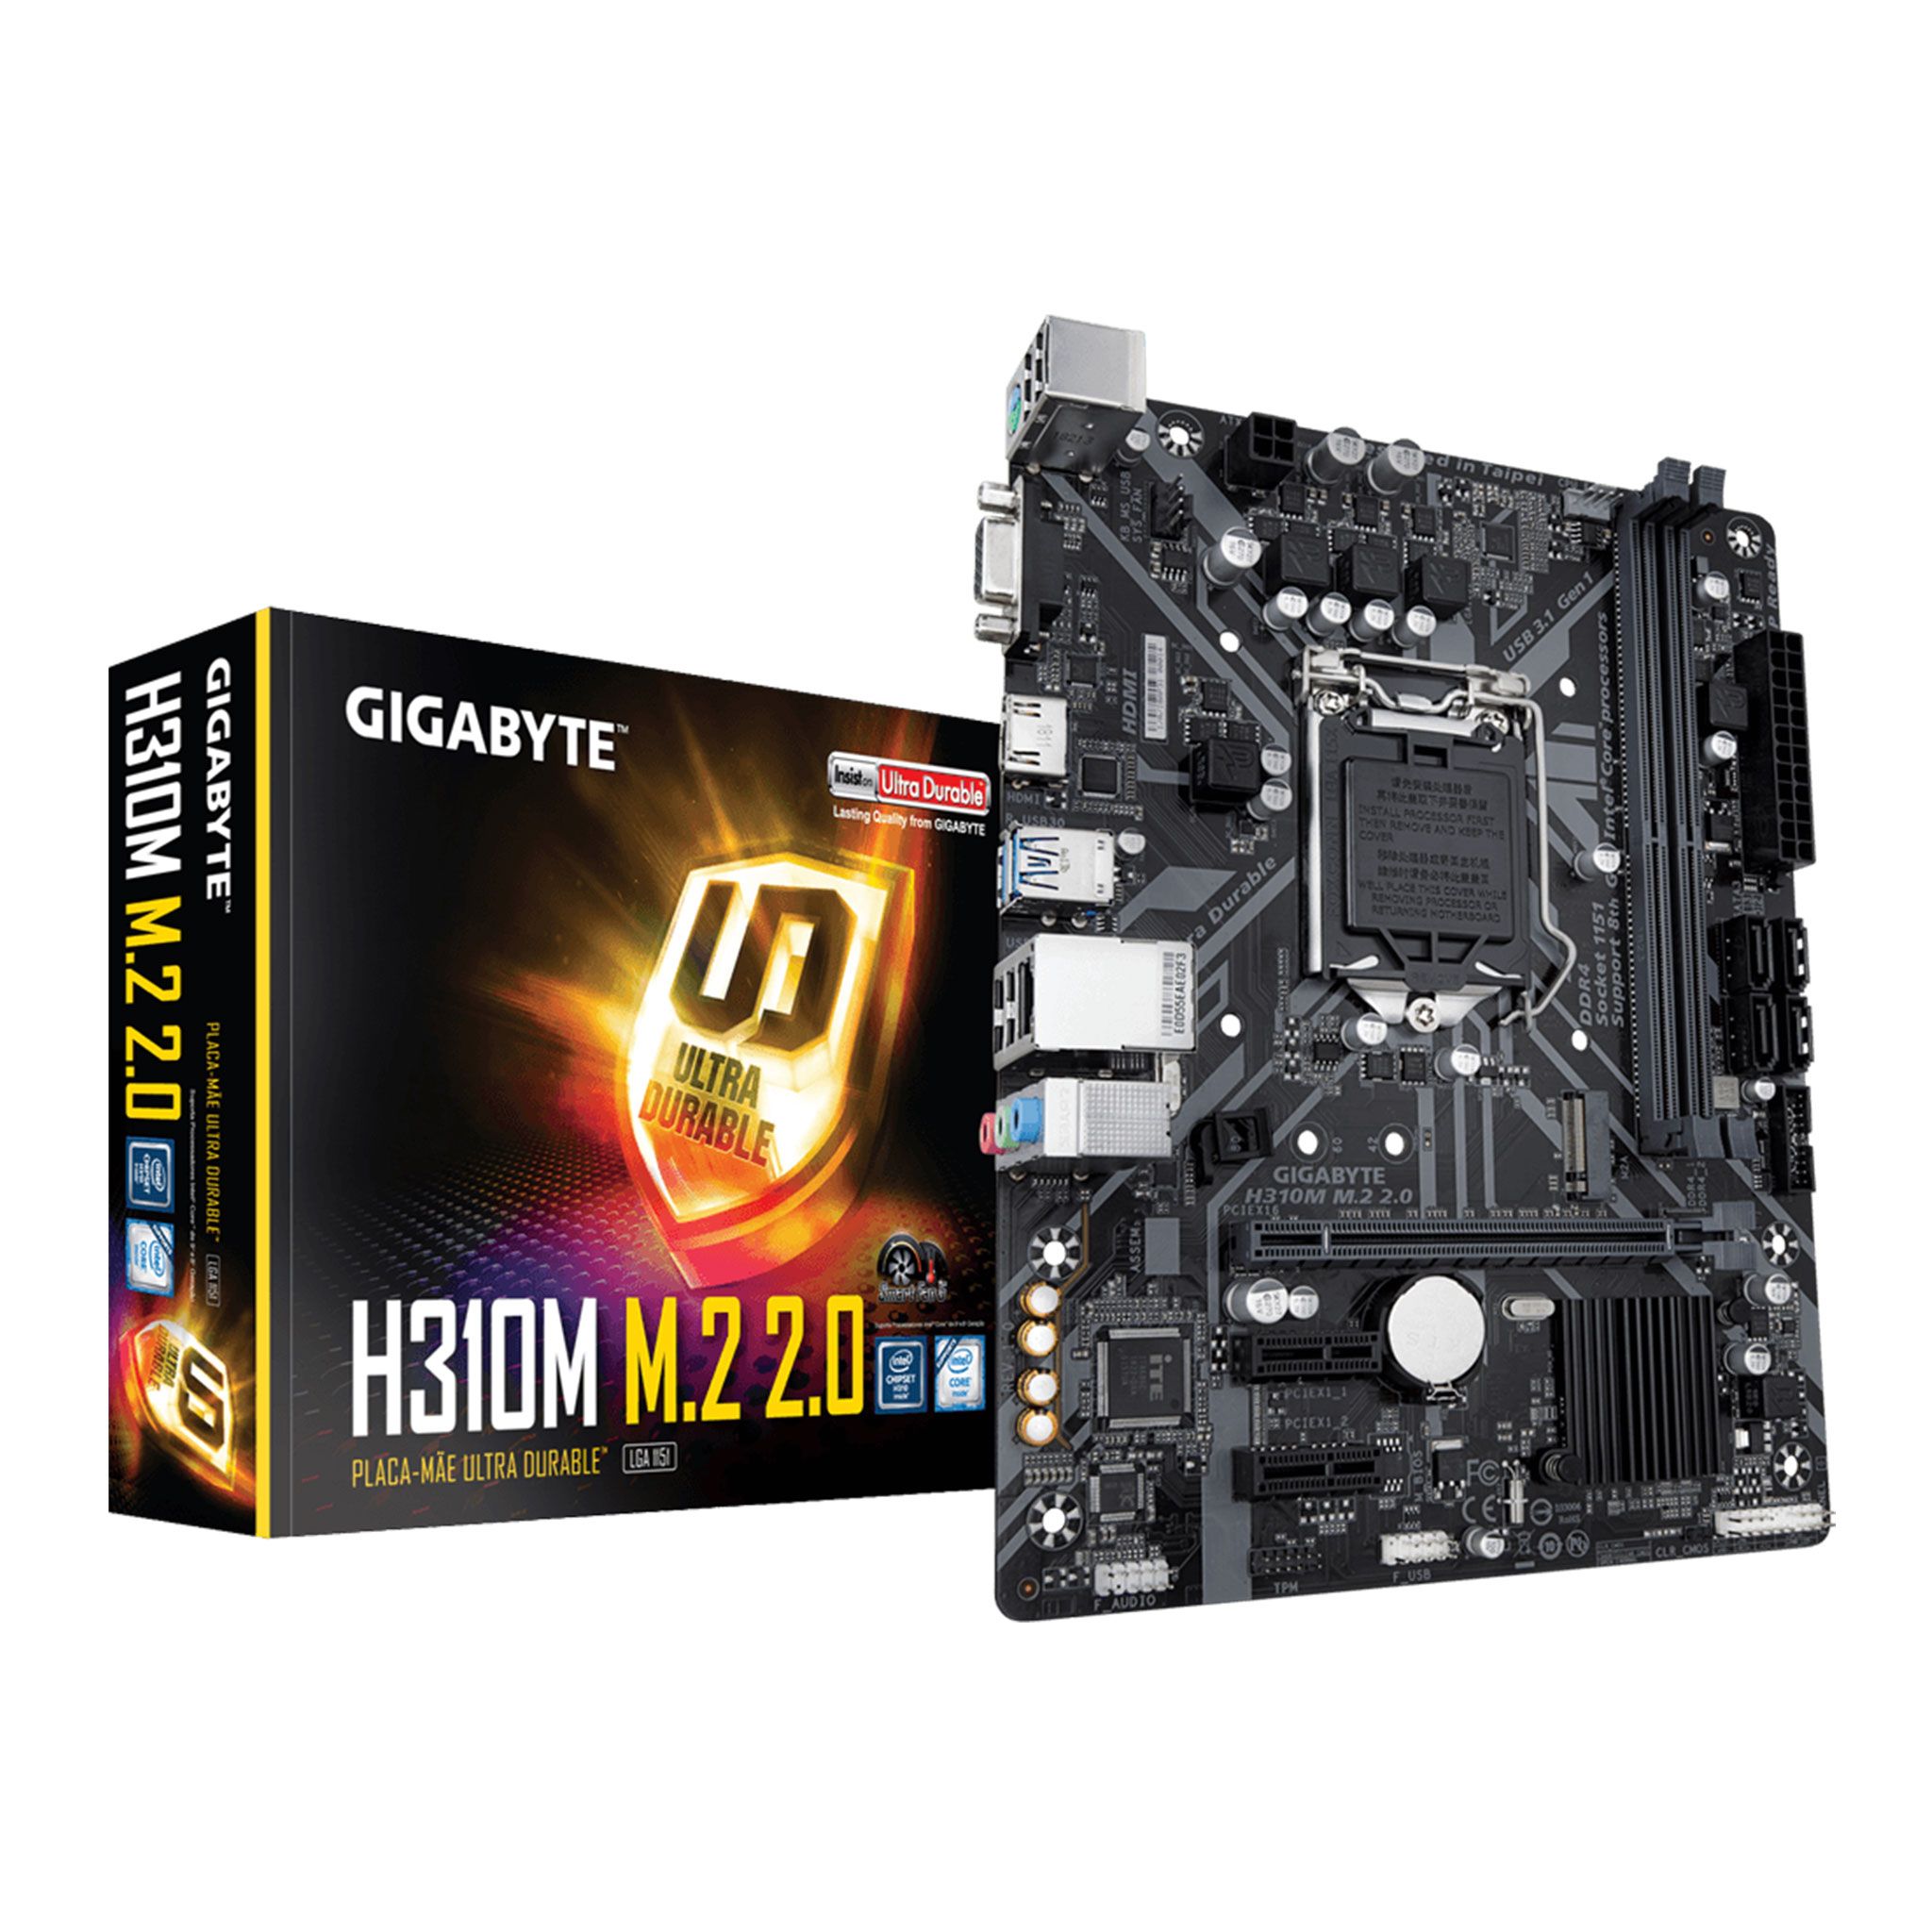 Mainboard Gigabyte H310M M.2 2.0 (rev. 1.x) | Intel H310, Socket 1151, ATX, 2 khe DDR4